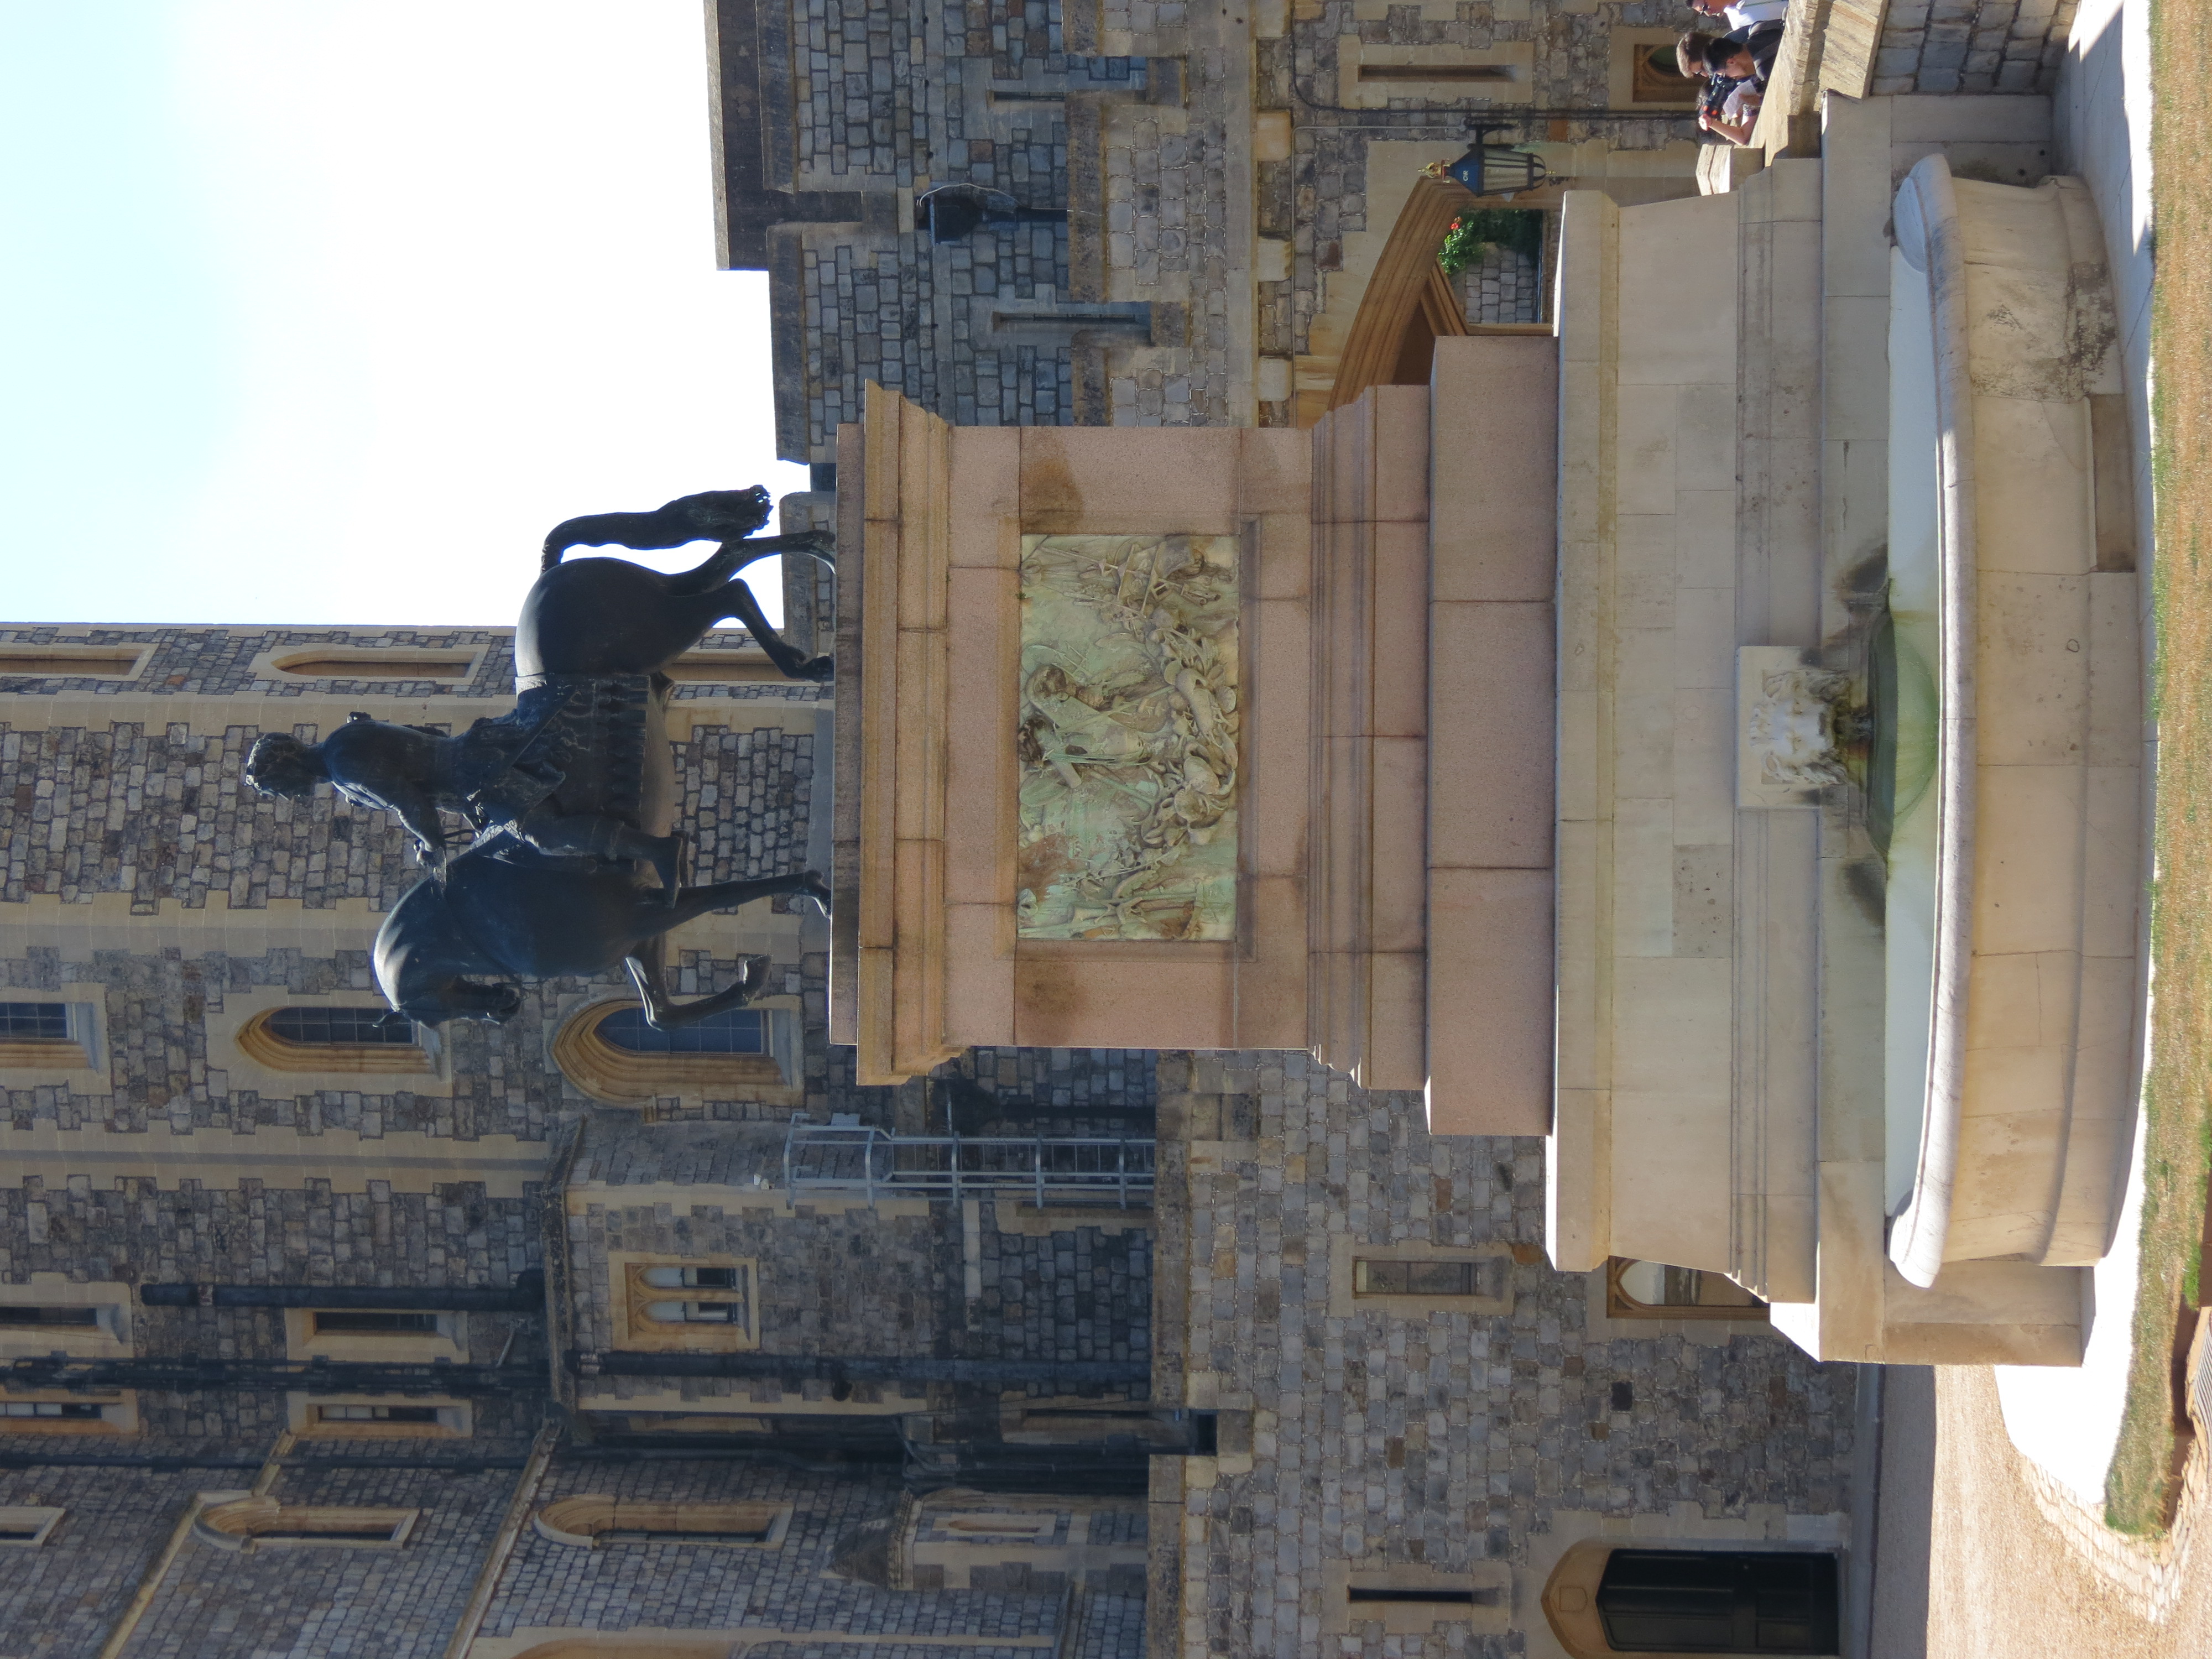 Equestrian statue of Charles II, Windsor Castle